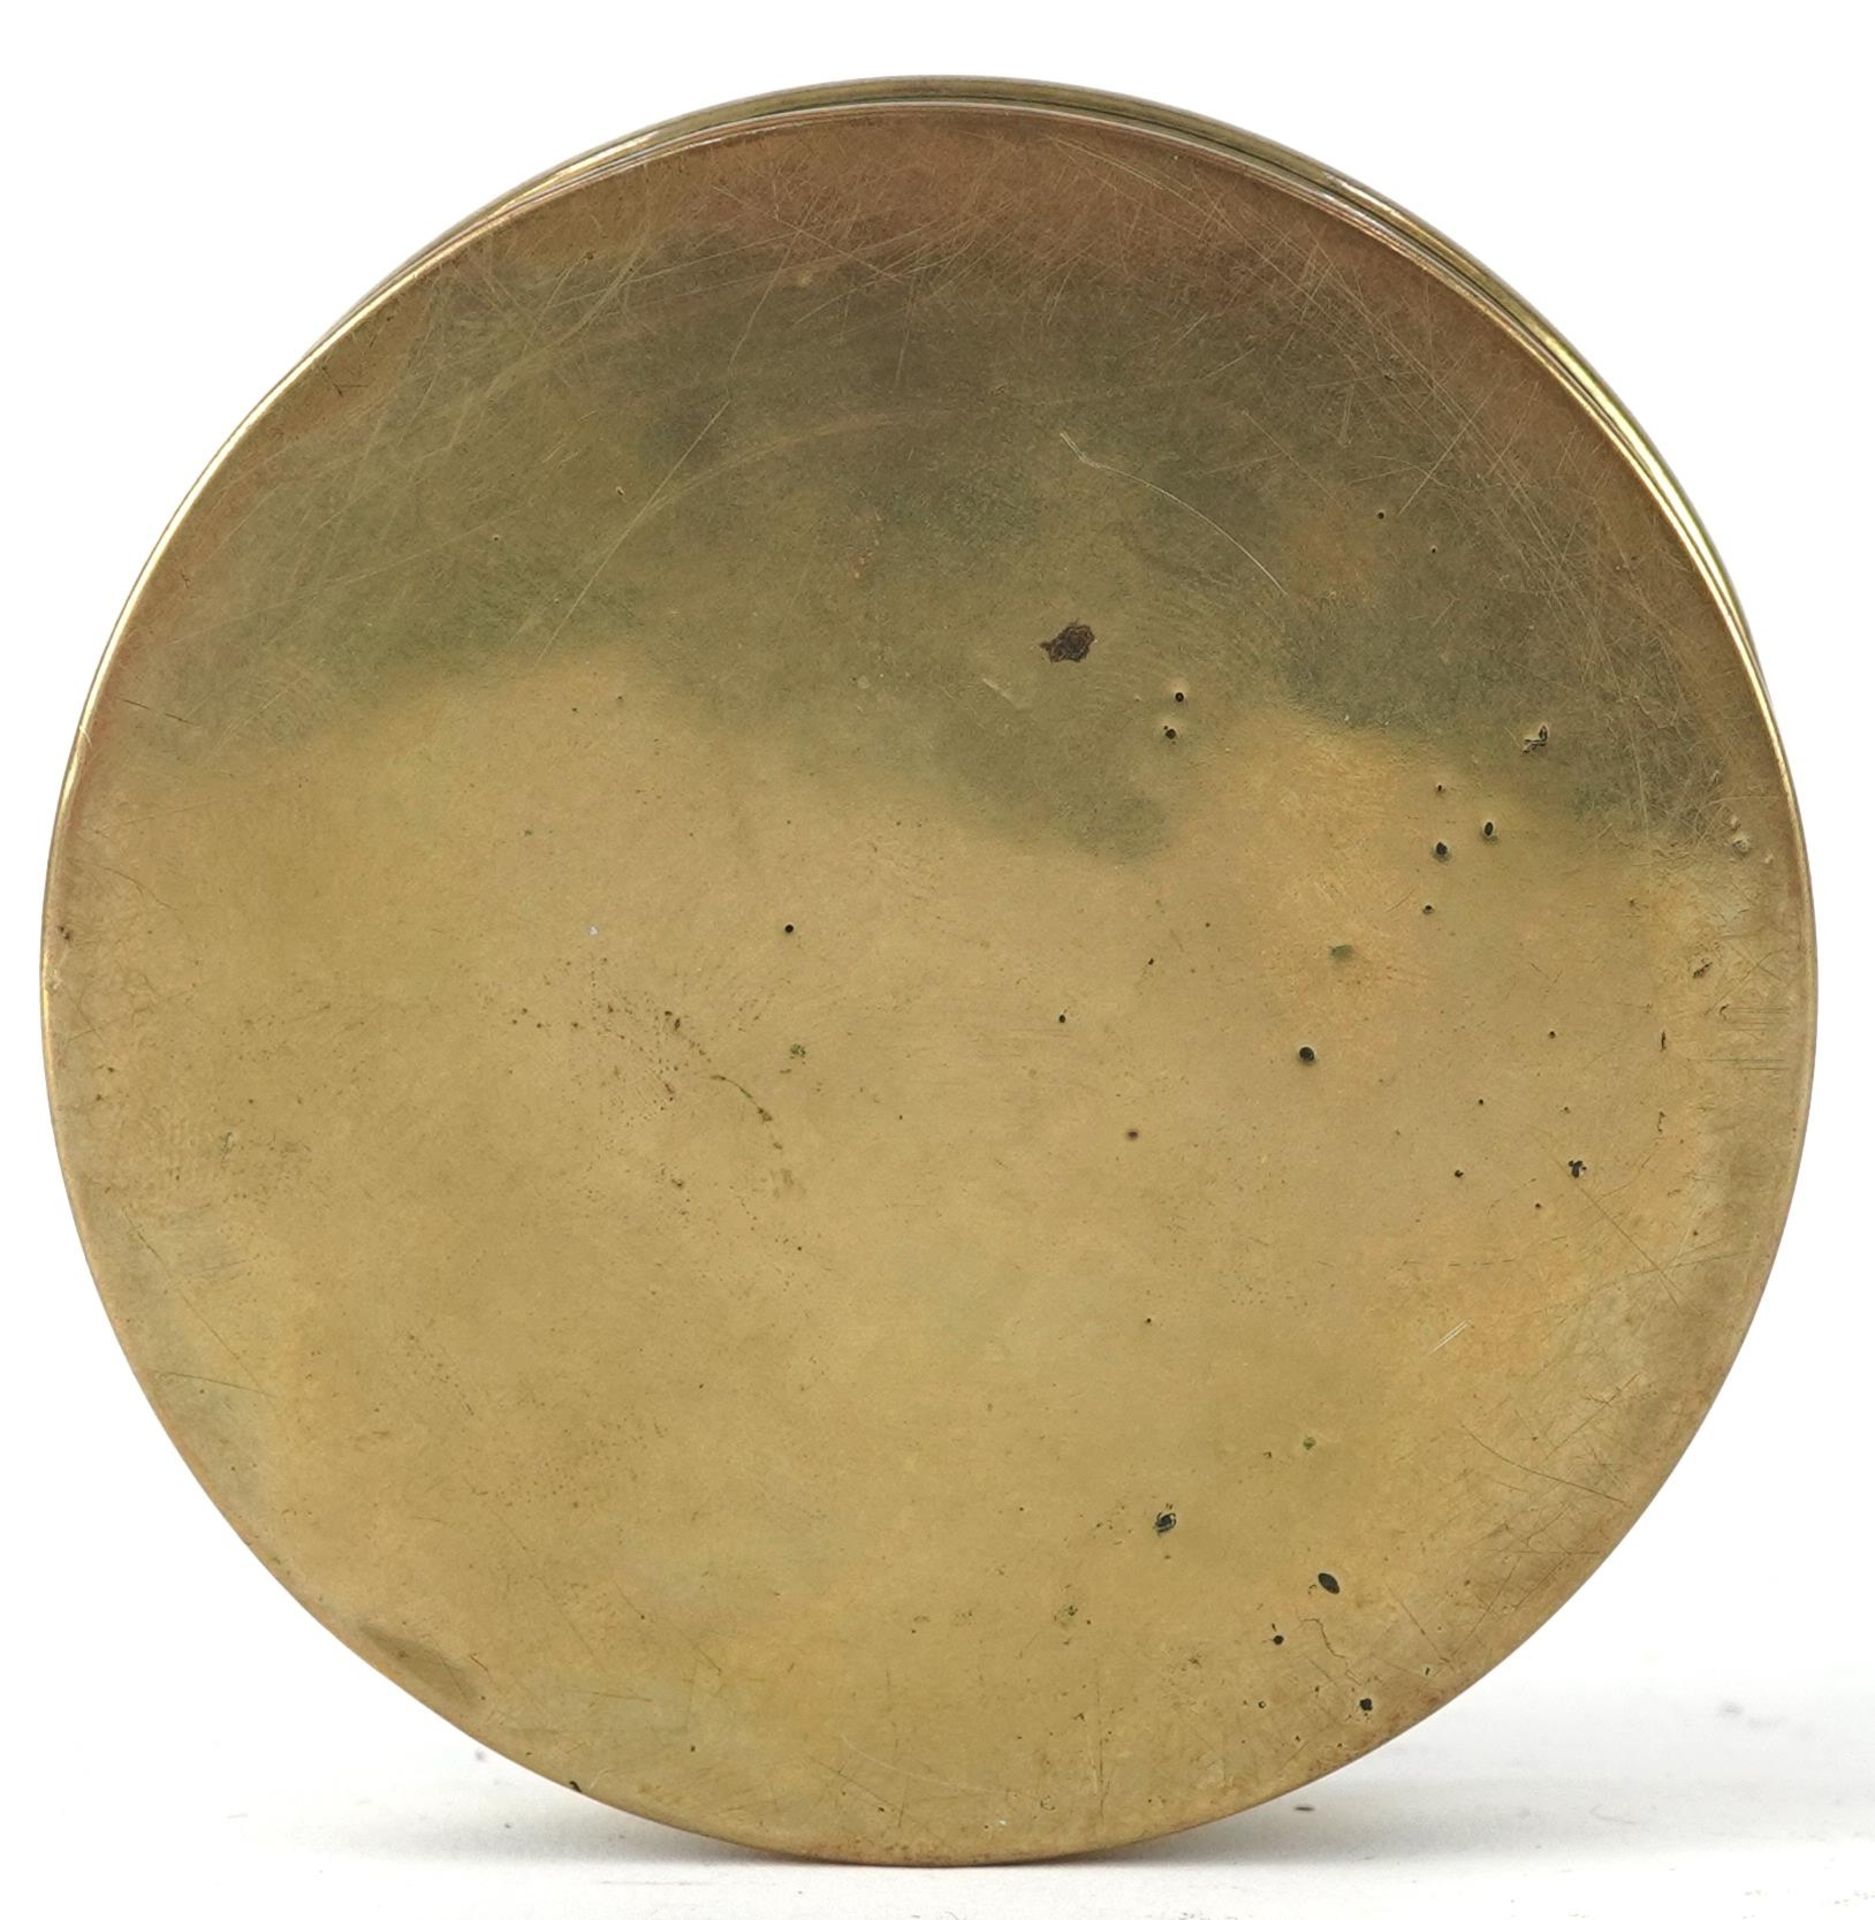 Masonic interest brass tobacco box, 9cm in diameter - Image 4 of 4